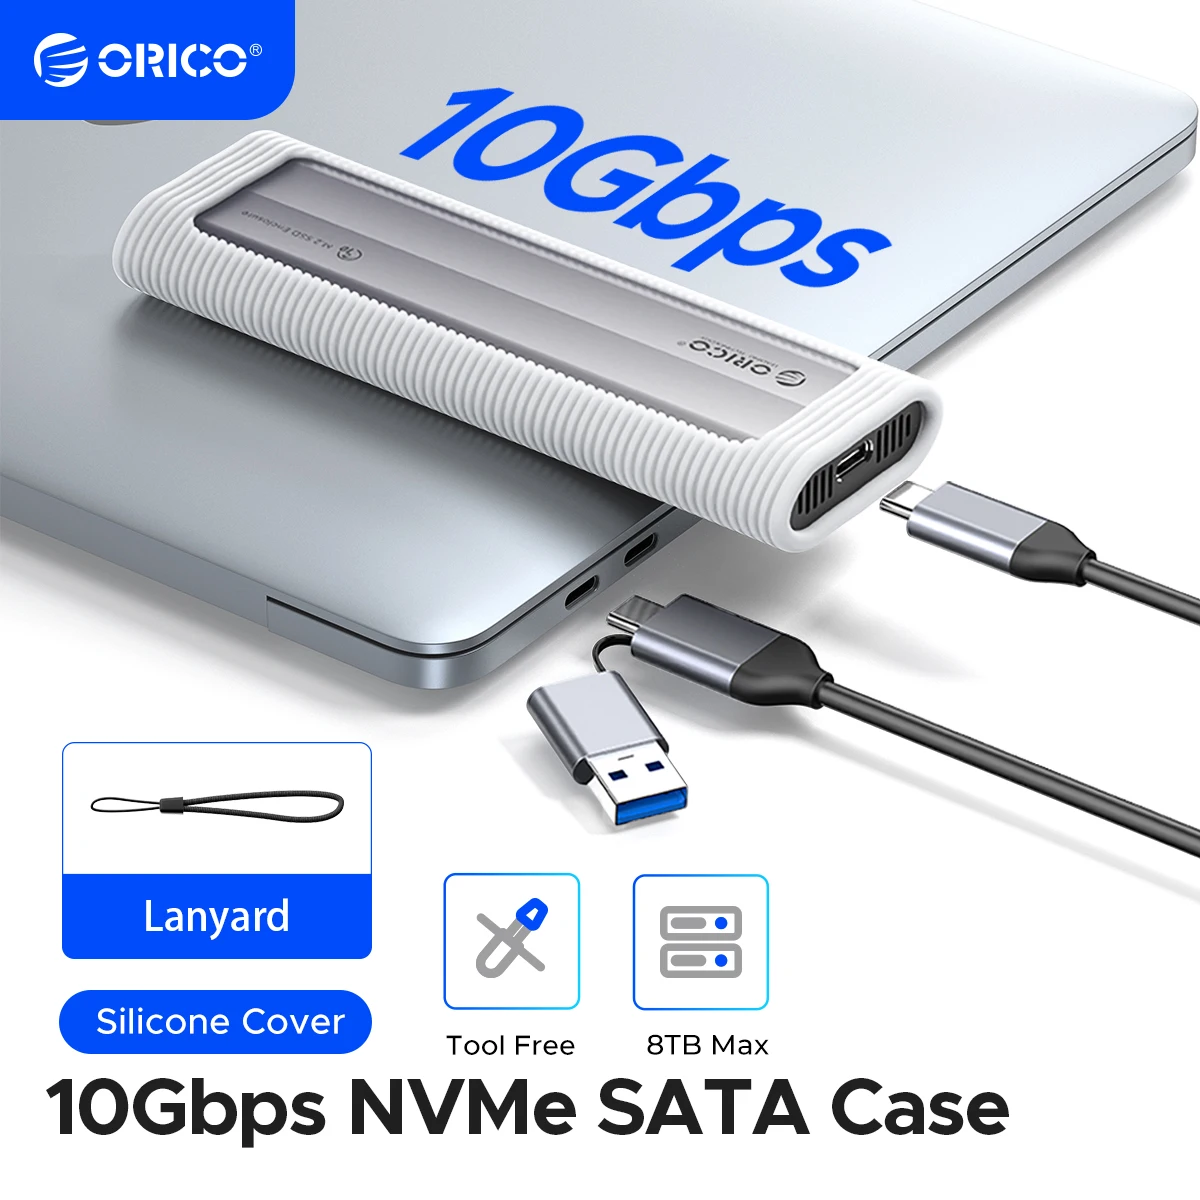 ORICO 외장 USB 인클로저 도구 필요 없는 M.2 NVMe SATA SSD 어댑터, PCIe NVMe 및 SATA SSD용 UASP 지지대, 10Gbps